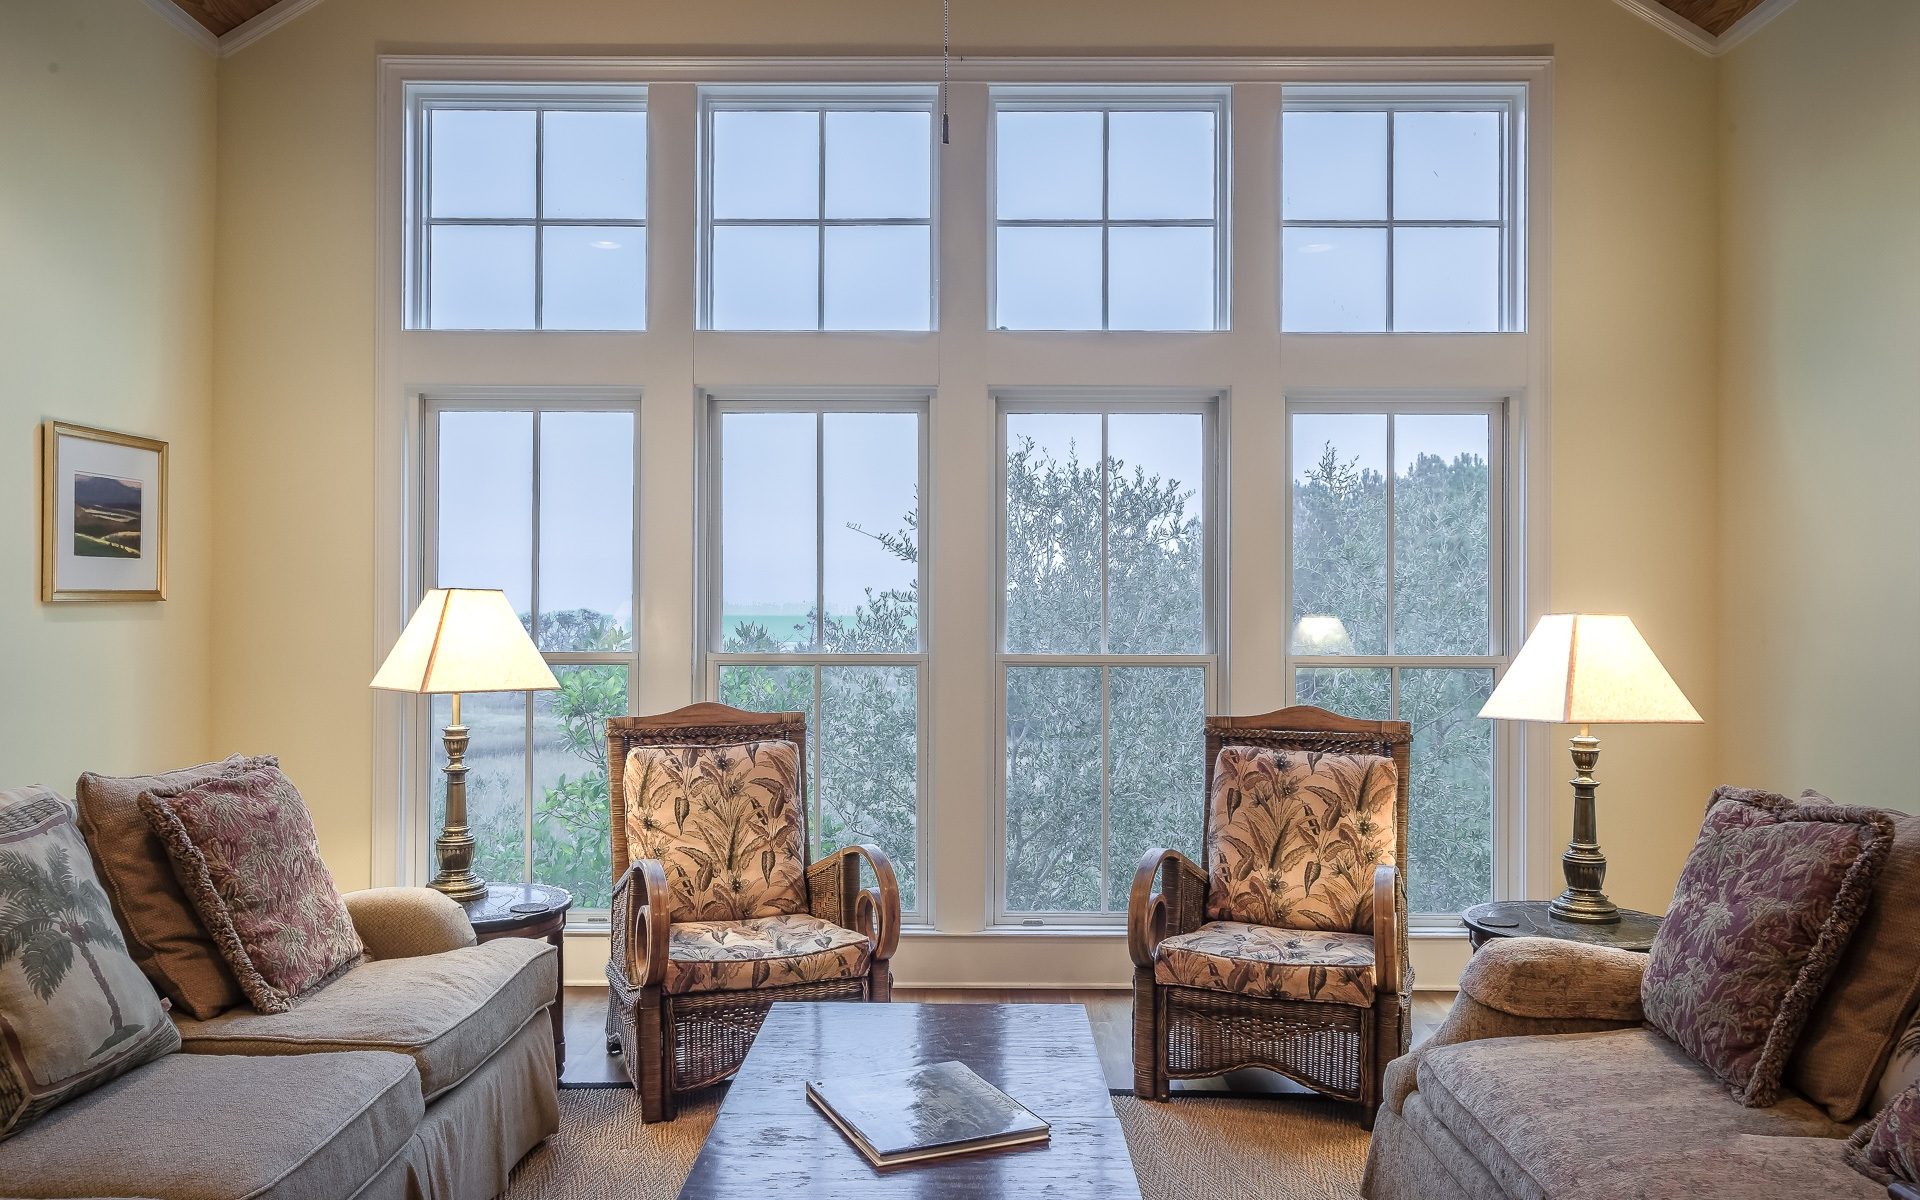 Cozy living room with large fiberglass windows.